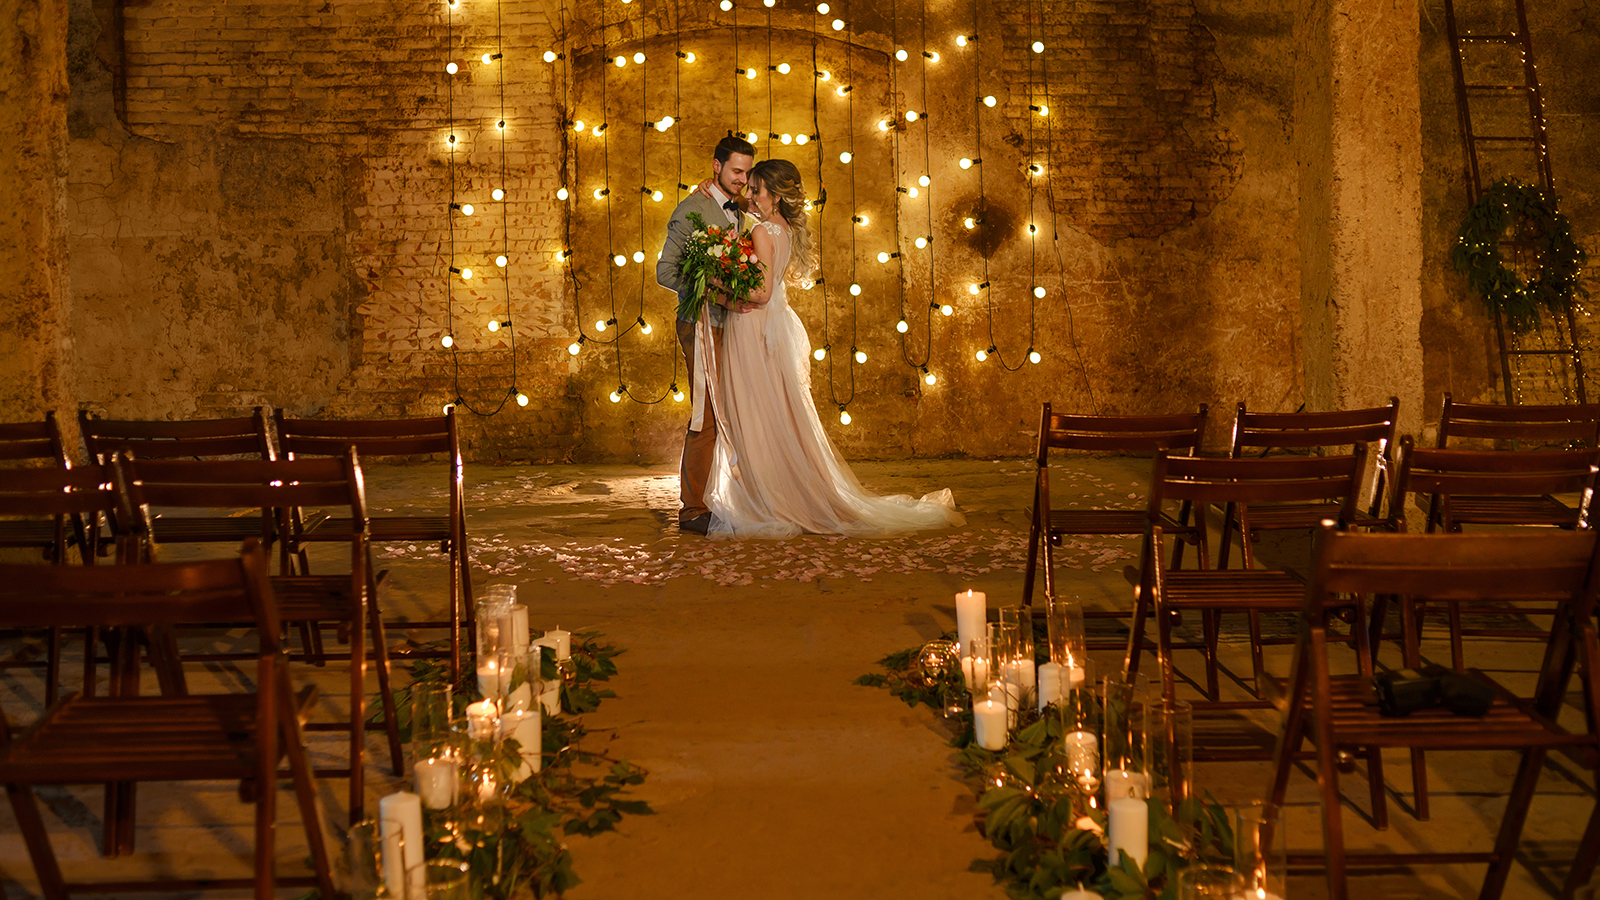 Stylish hipster wedding couple in romantic loft decorations at night